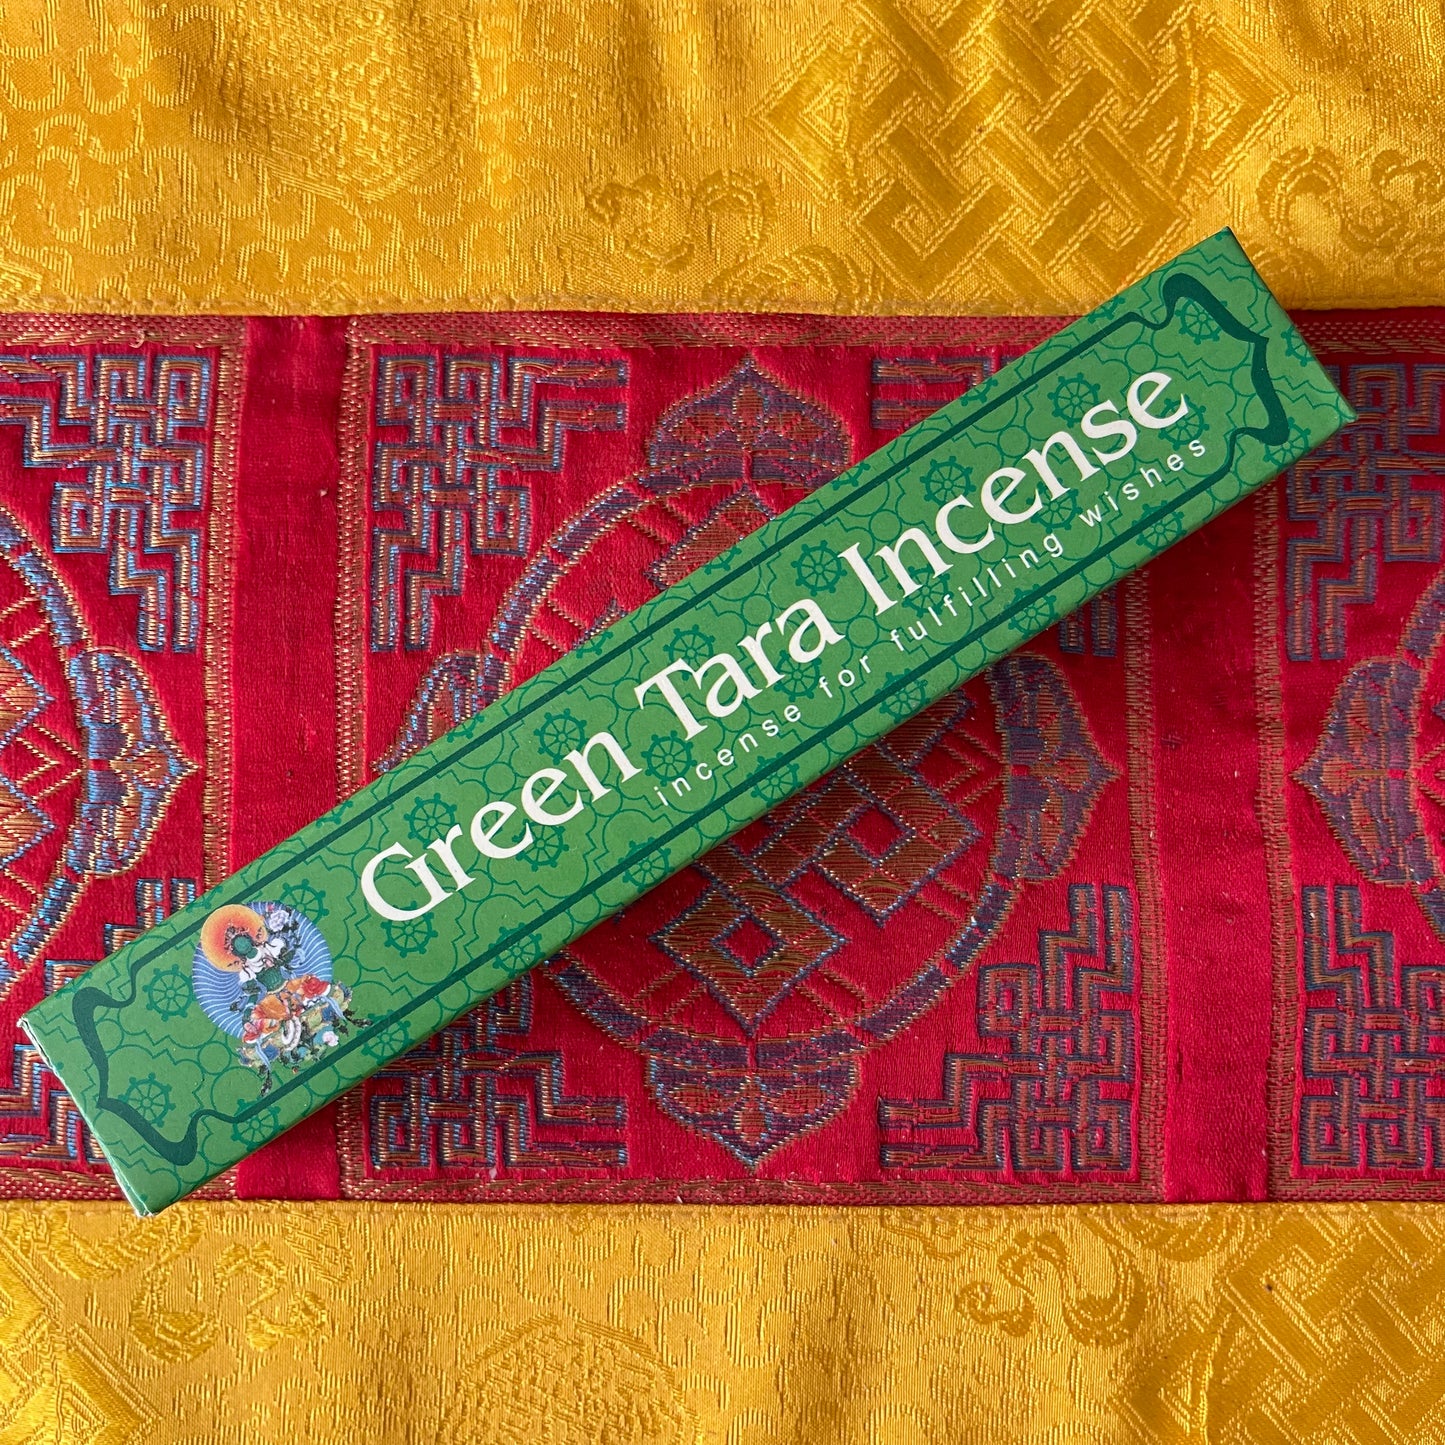 Green Tara Wish Fulfilling Incense Box